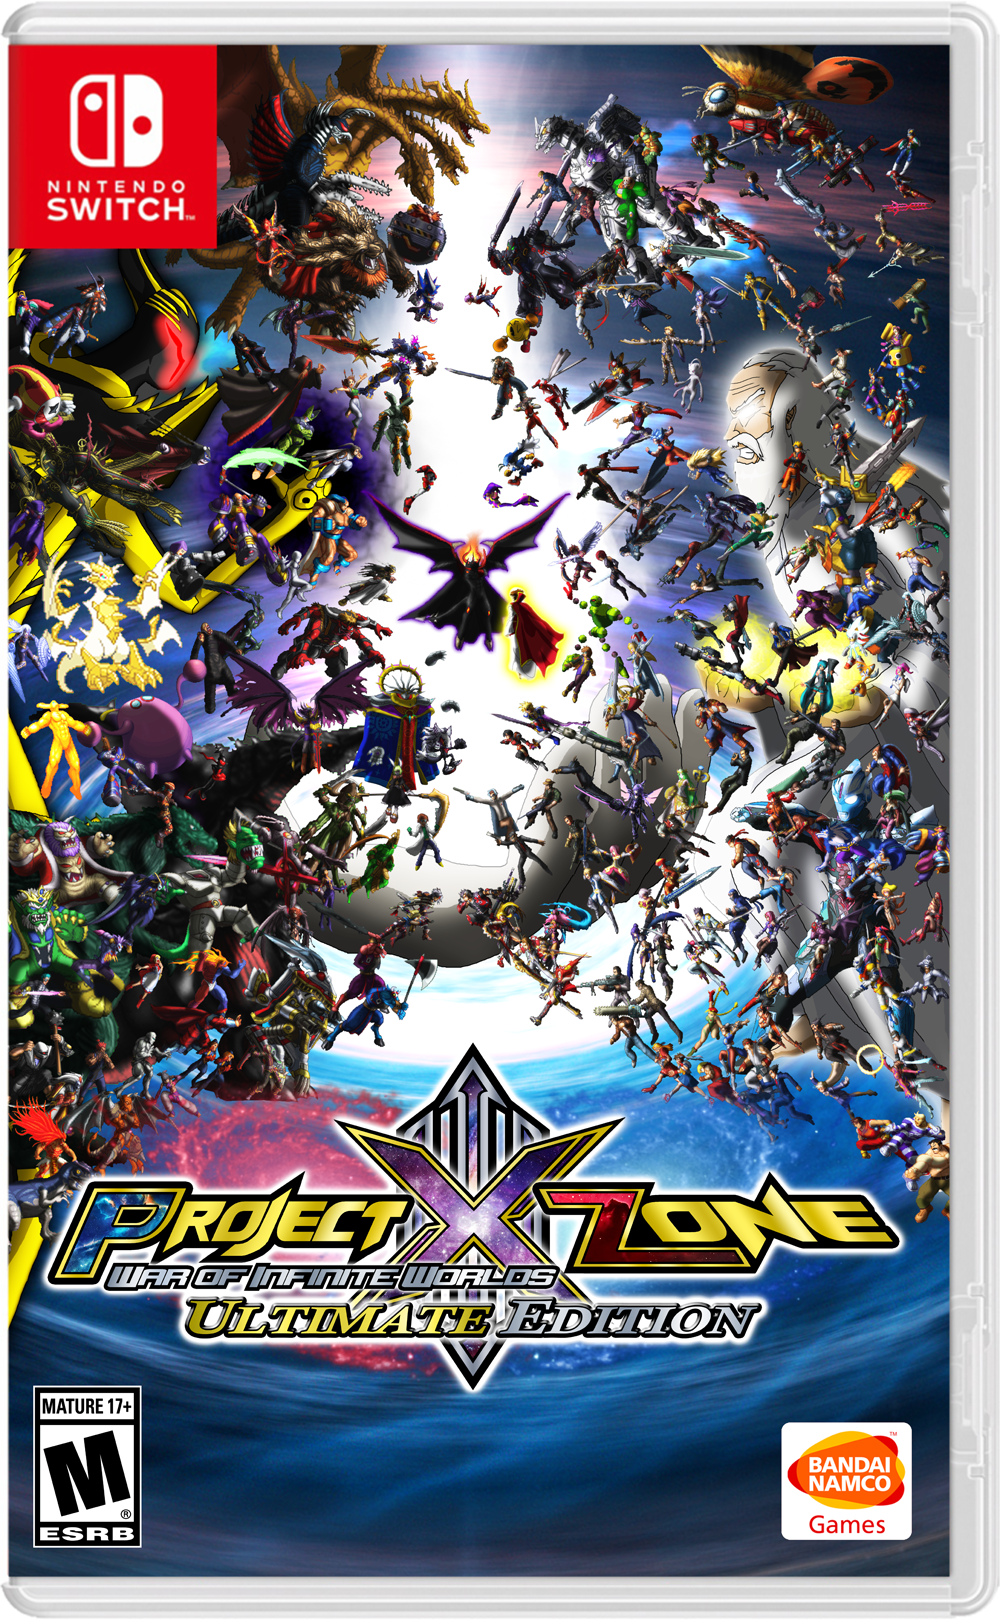 Project X Zone 3: War of Infinite 